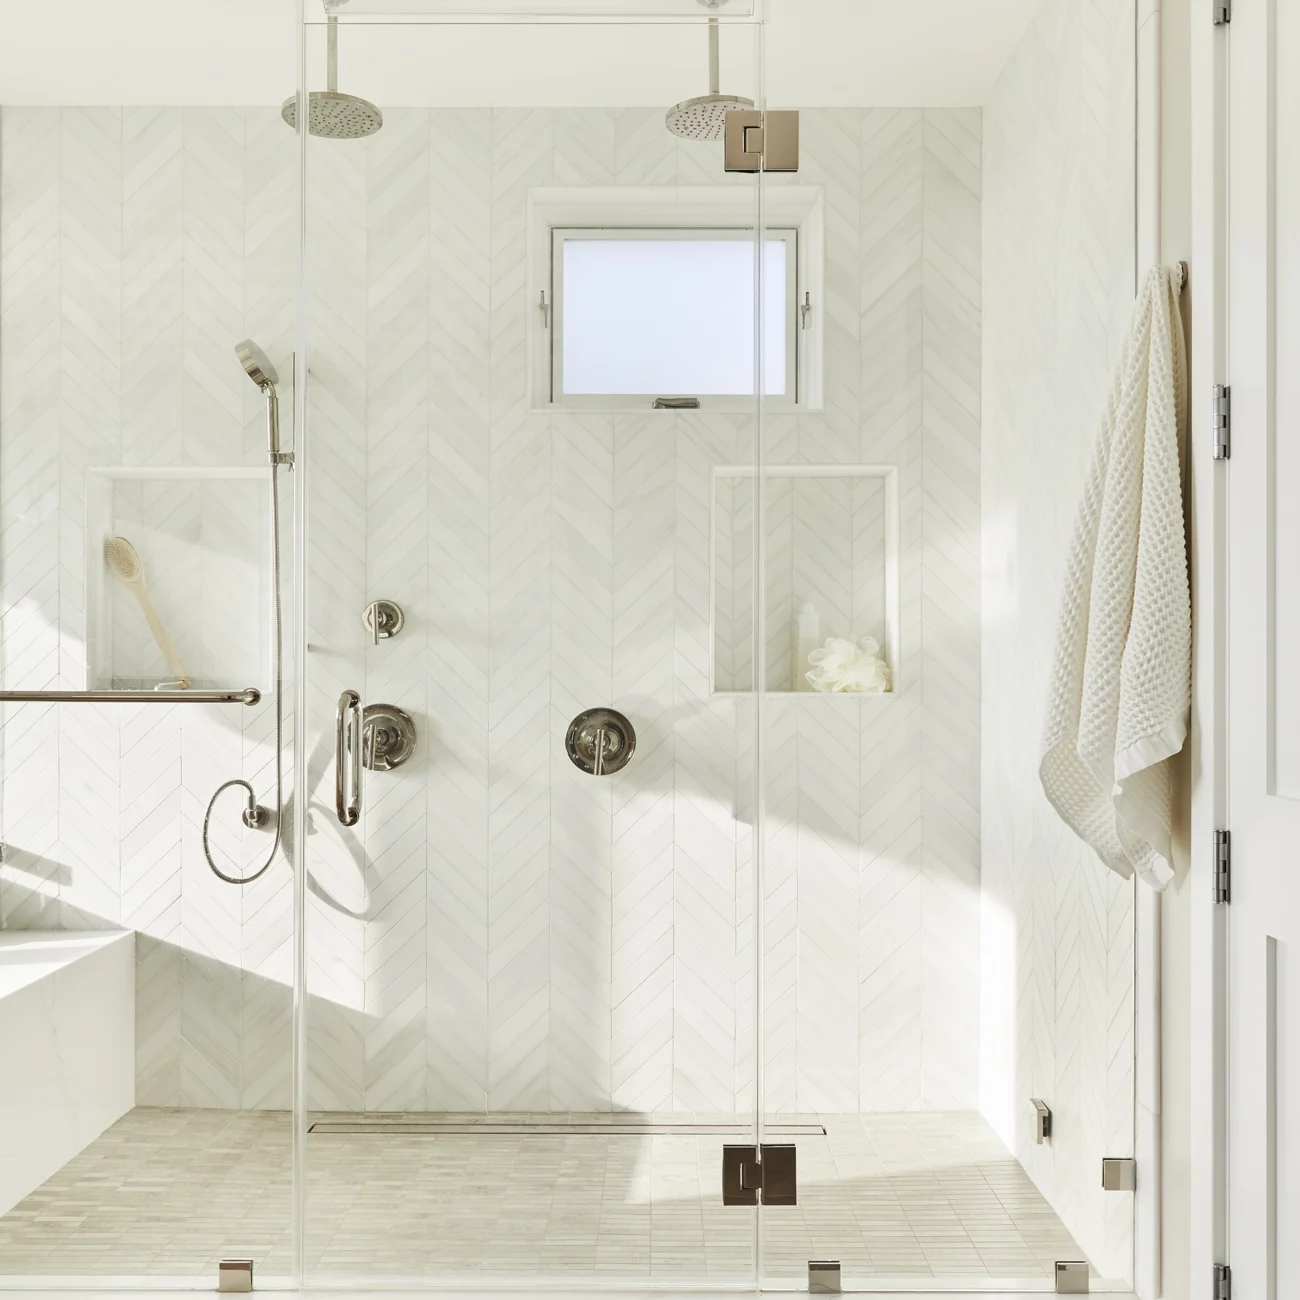 Christine Vroom Interiors | 27th | bright, costal bathroom with herringbone patterned tile